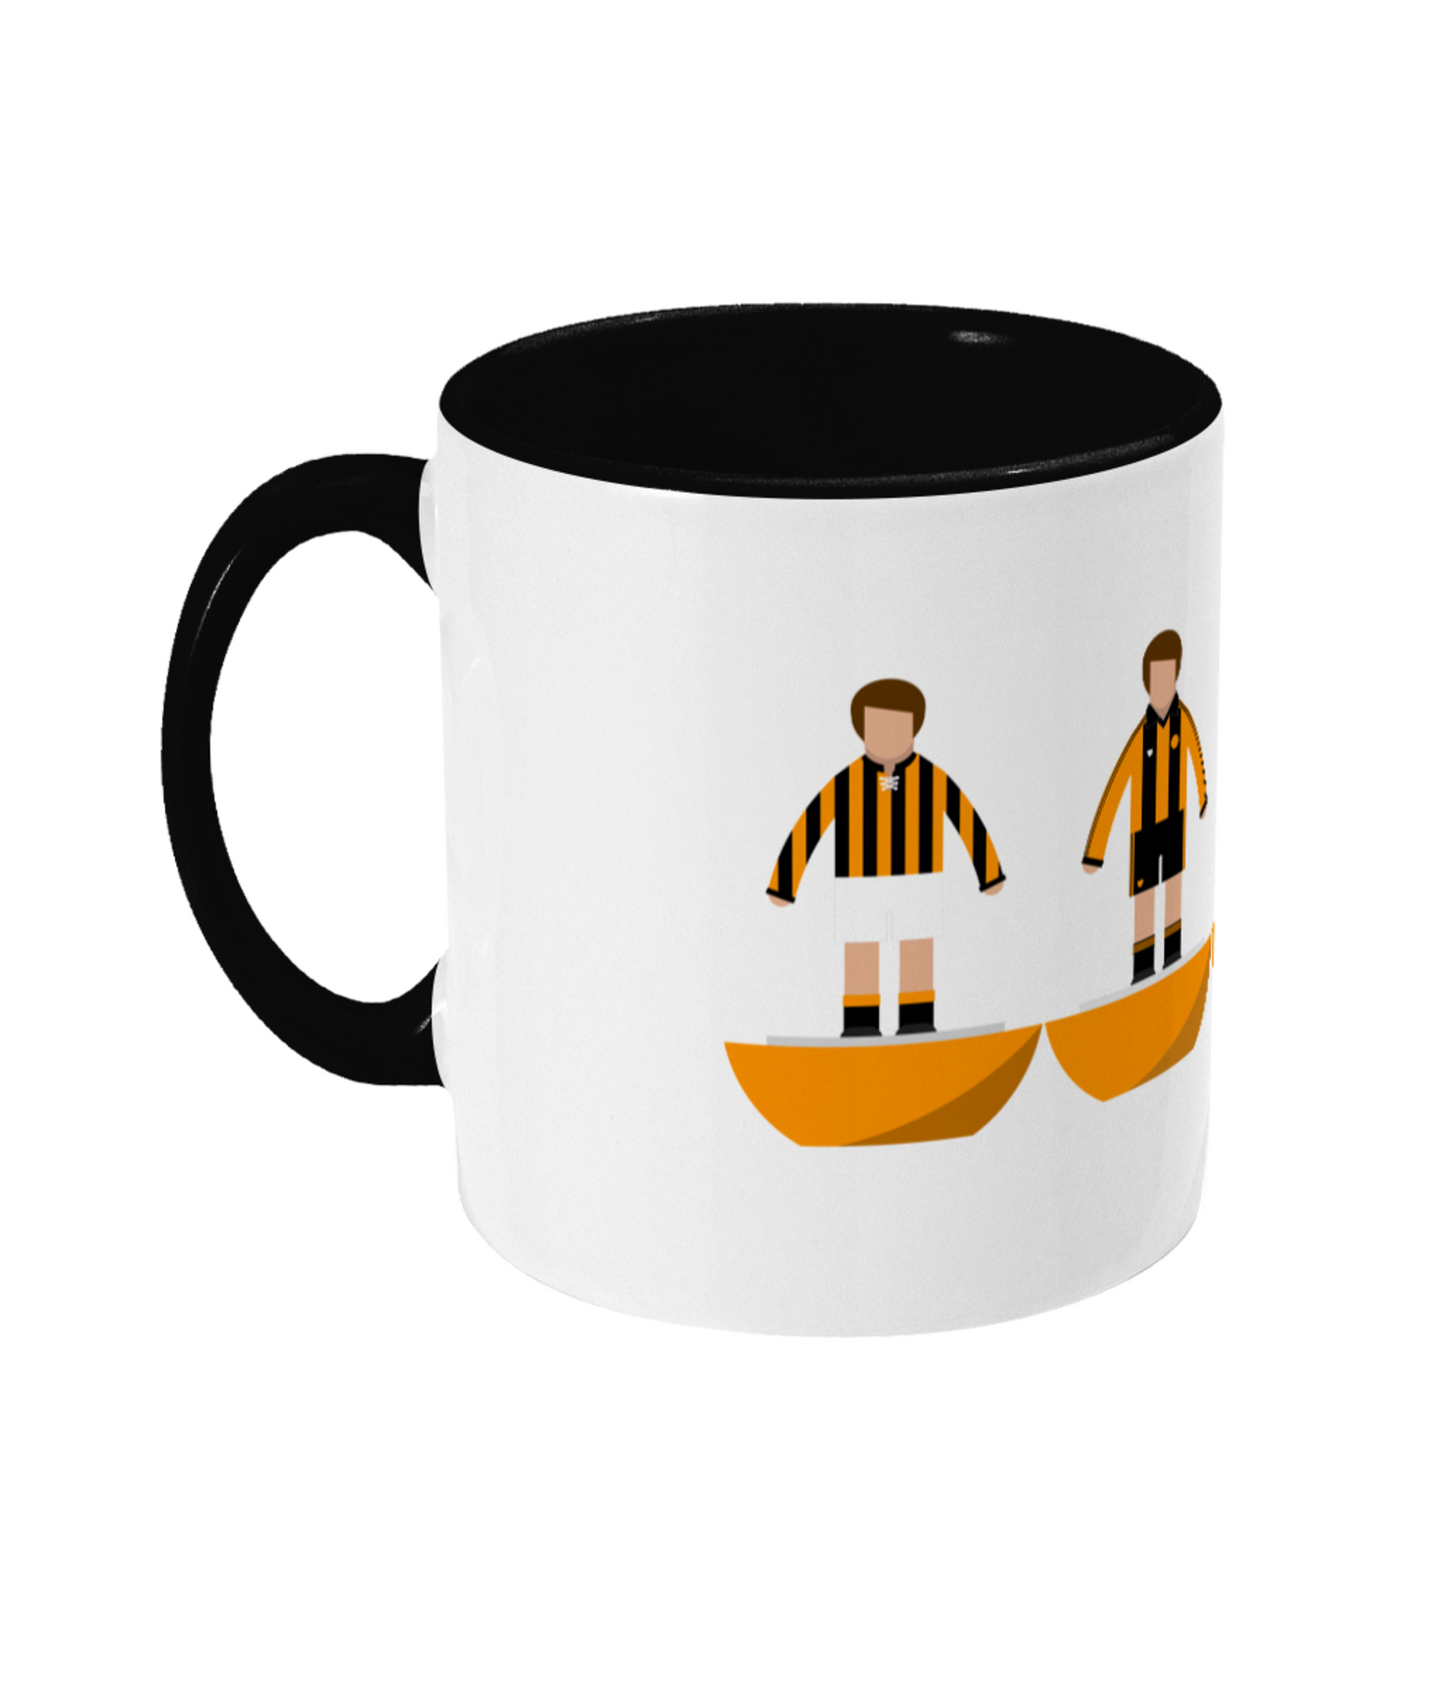 Football Kits 'Hull City combined' Mug